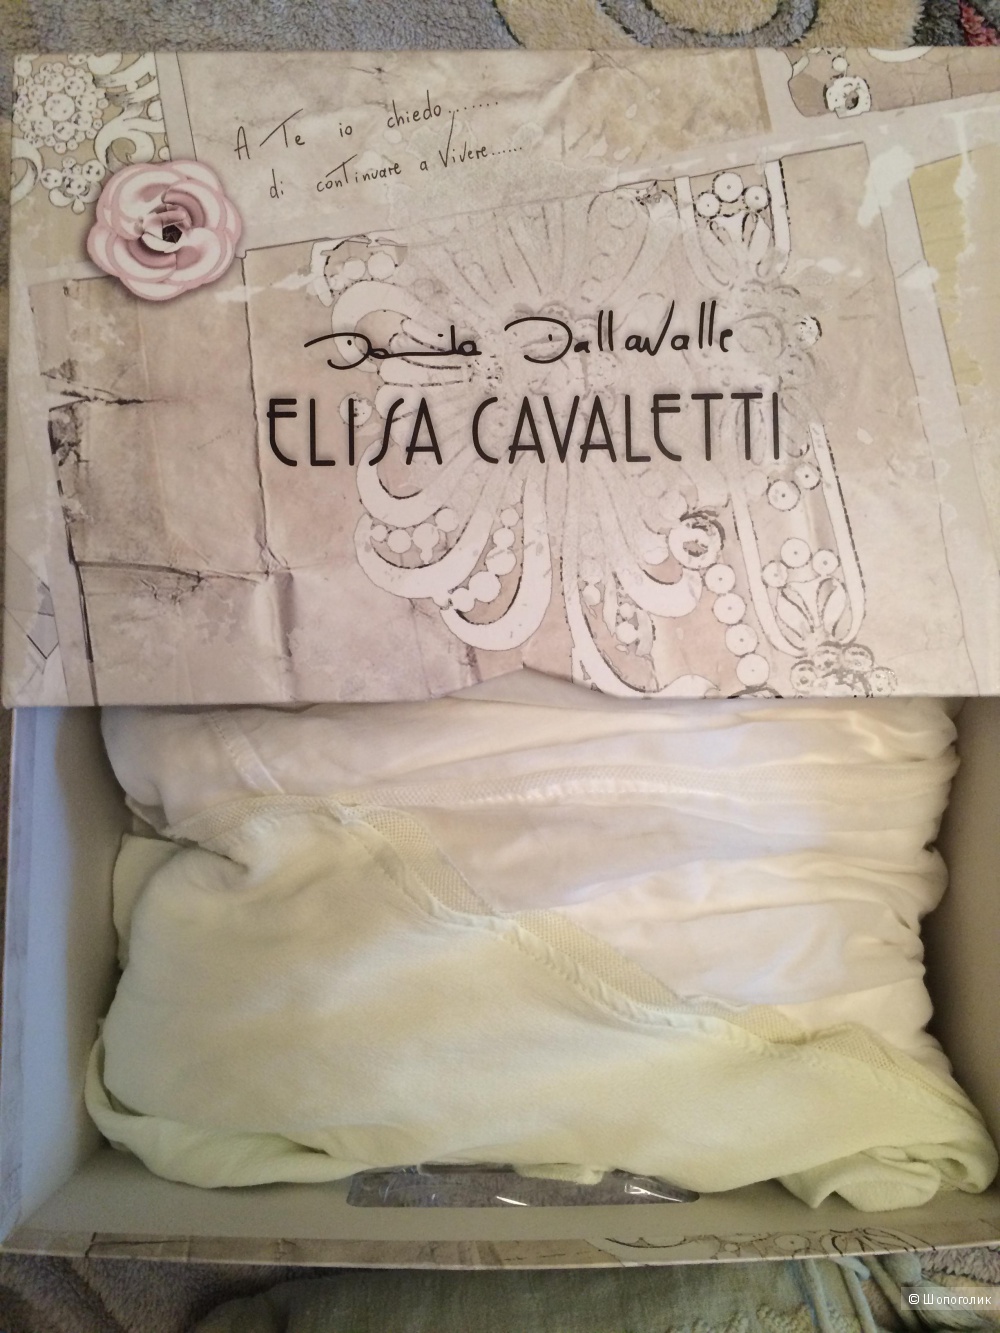 Длинная юбка Elisa Cavaletti